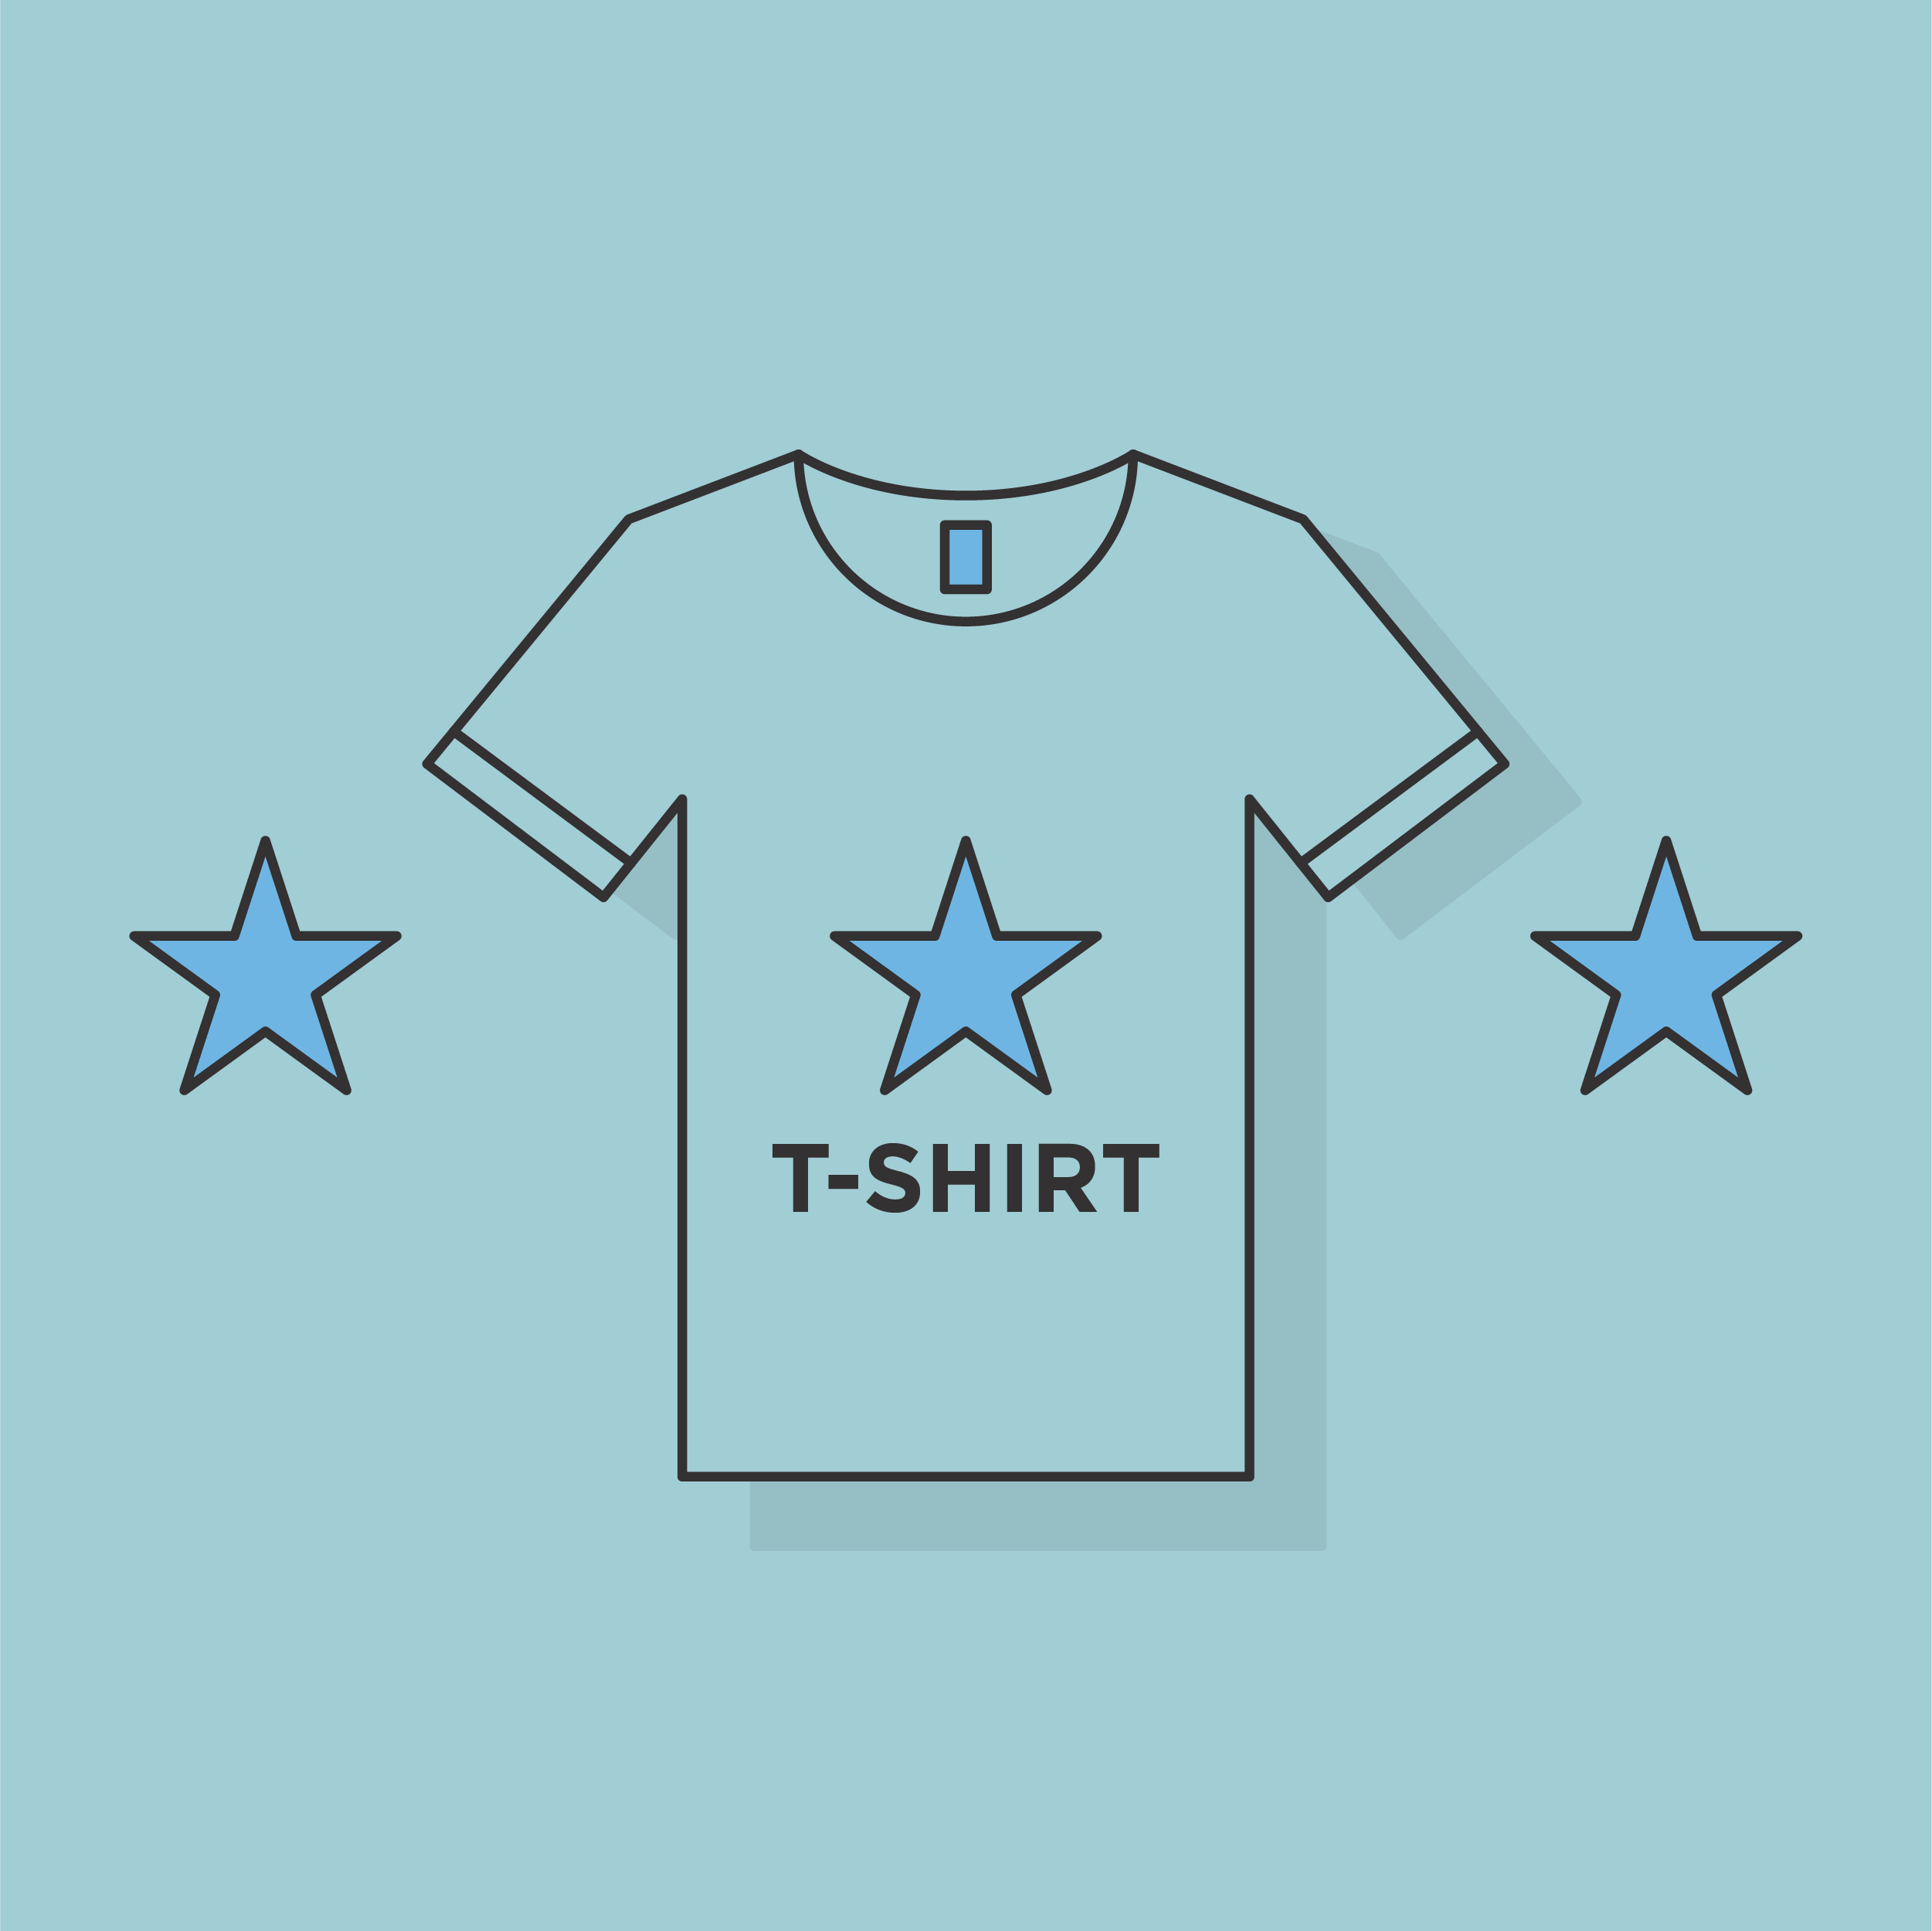 T-Shirt illustration with stars